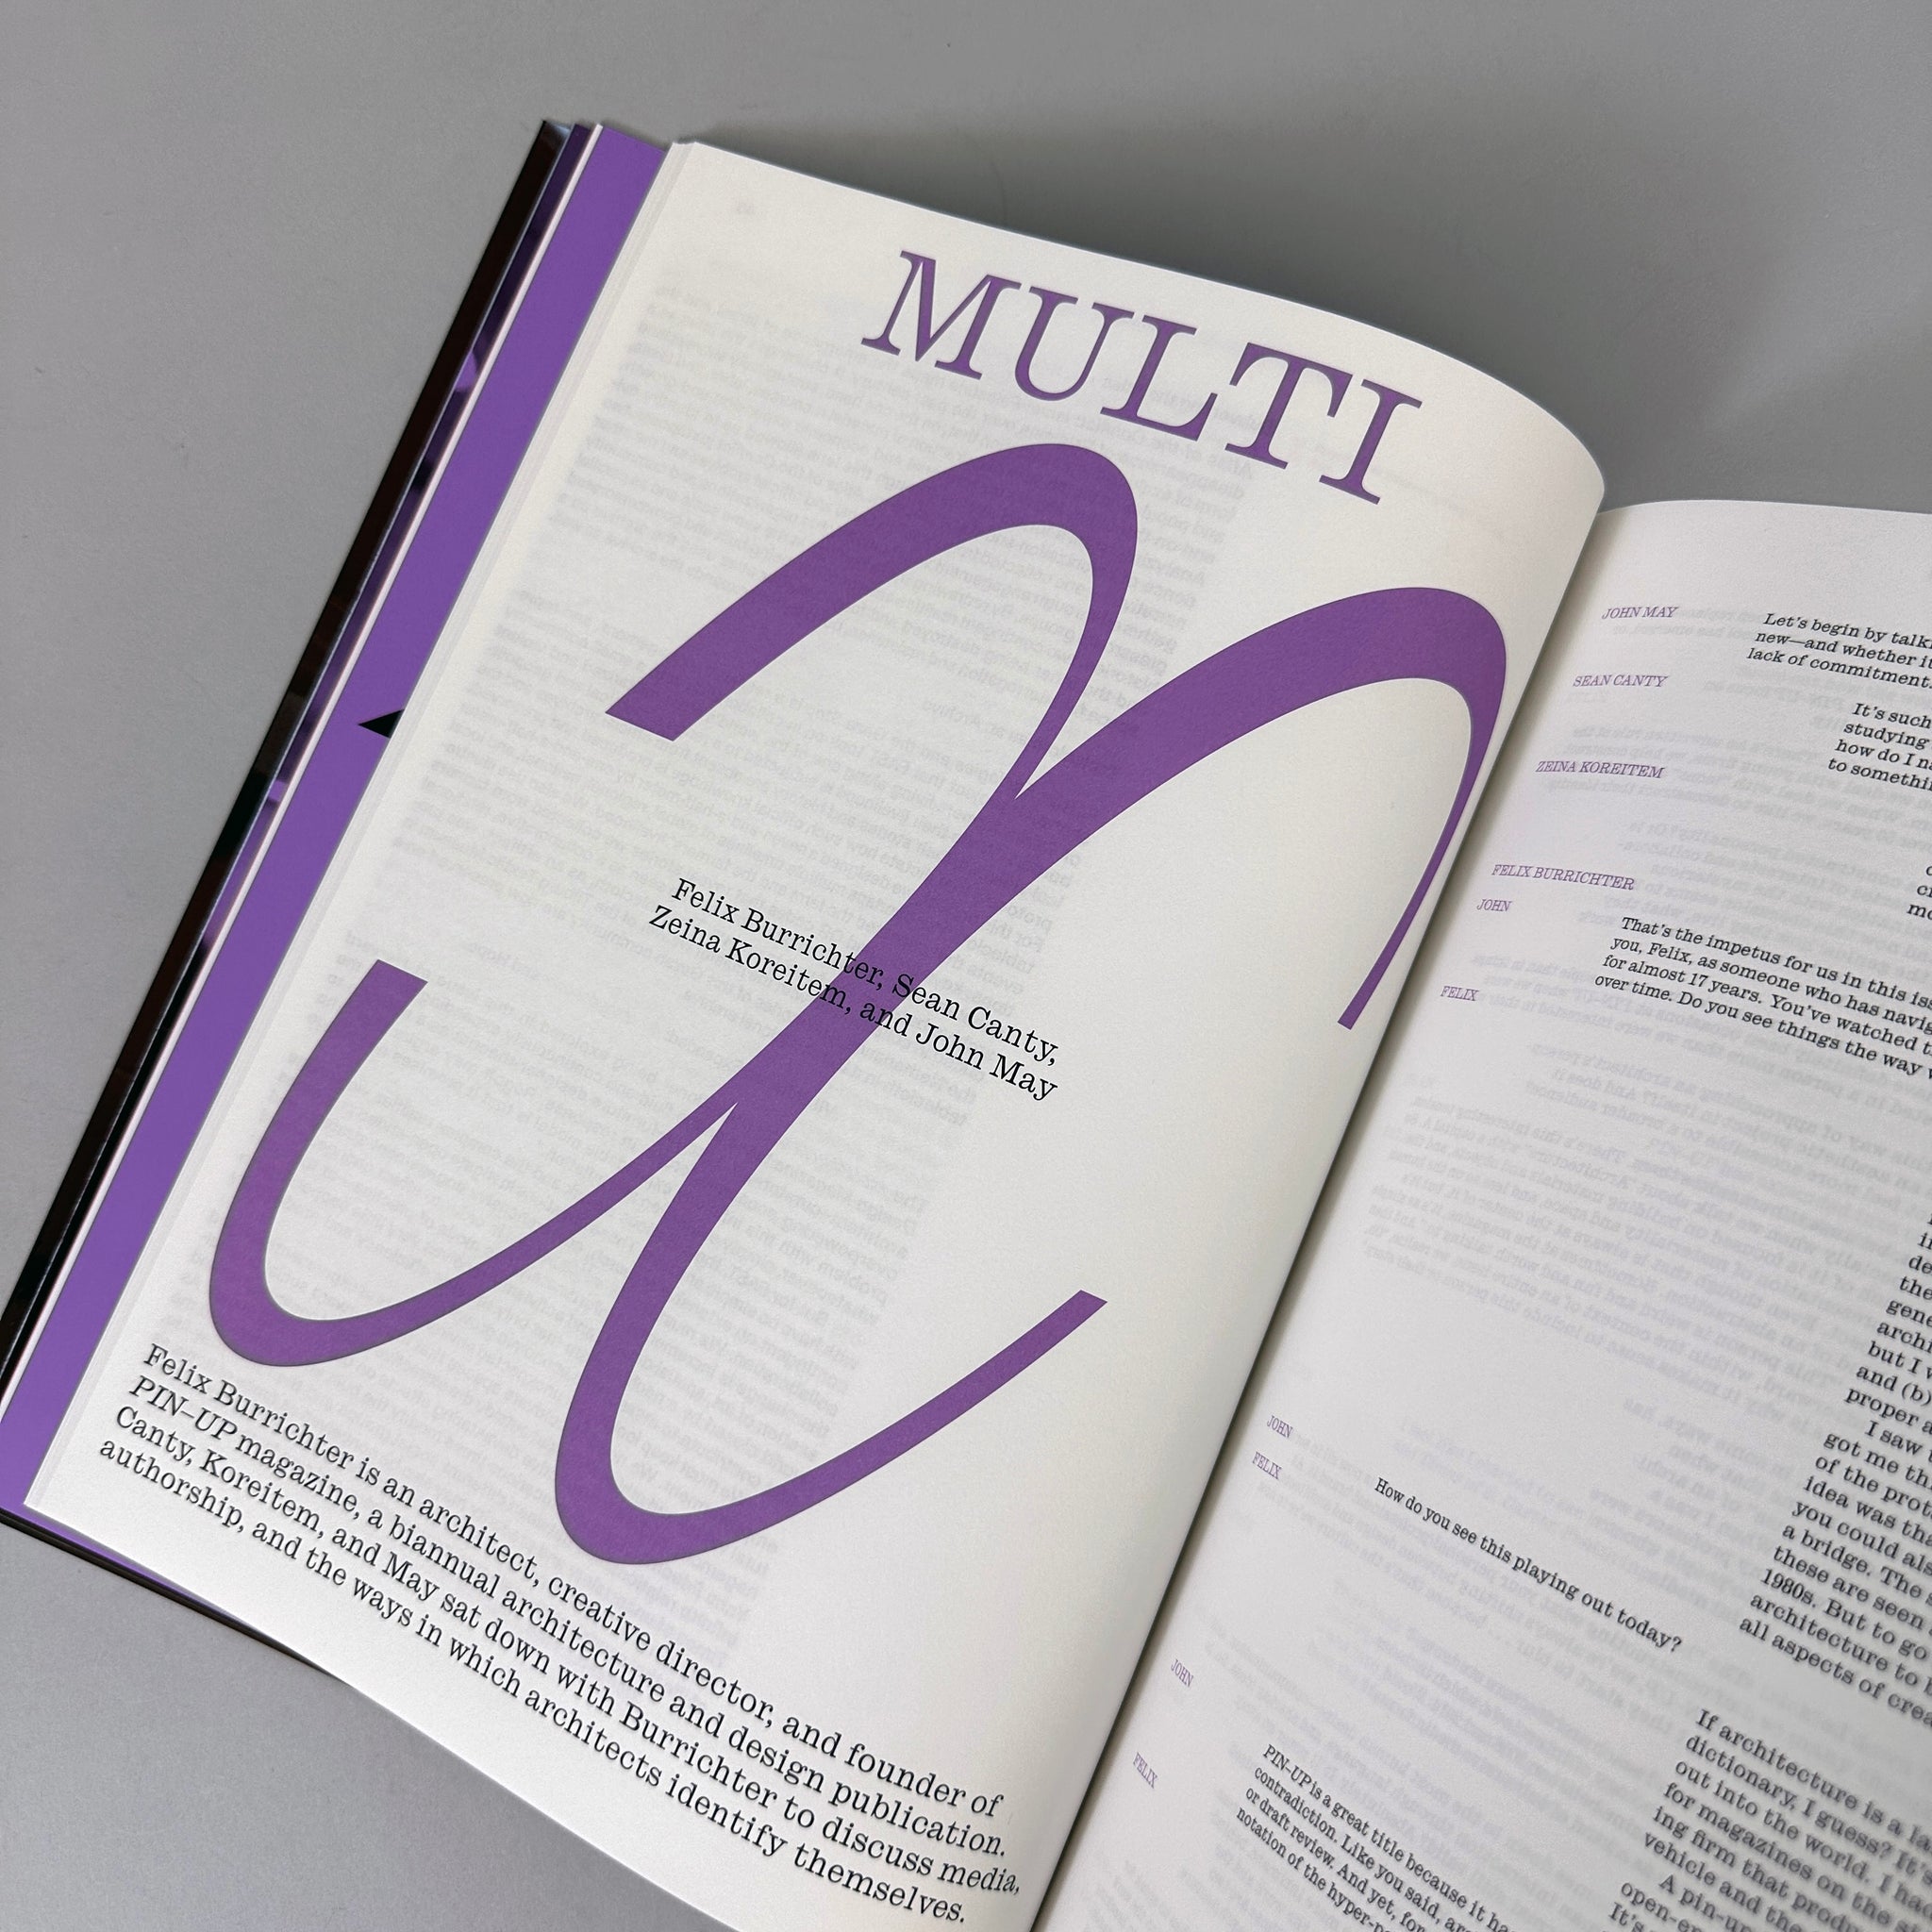 Harvard Design Magazine, Issue 51: Multihyphenate F/W 2023